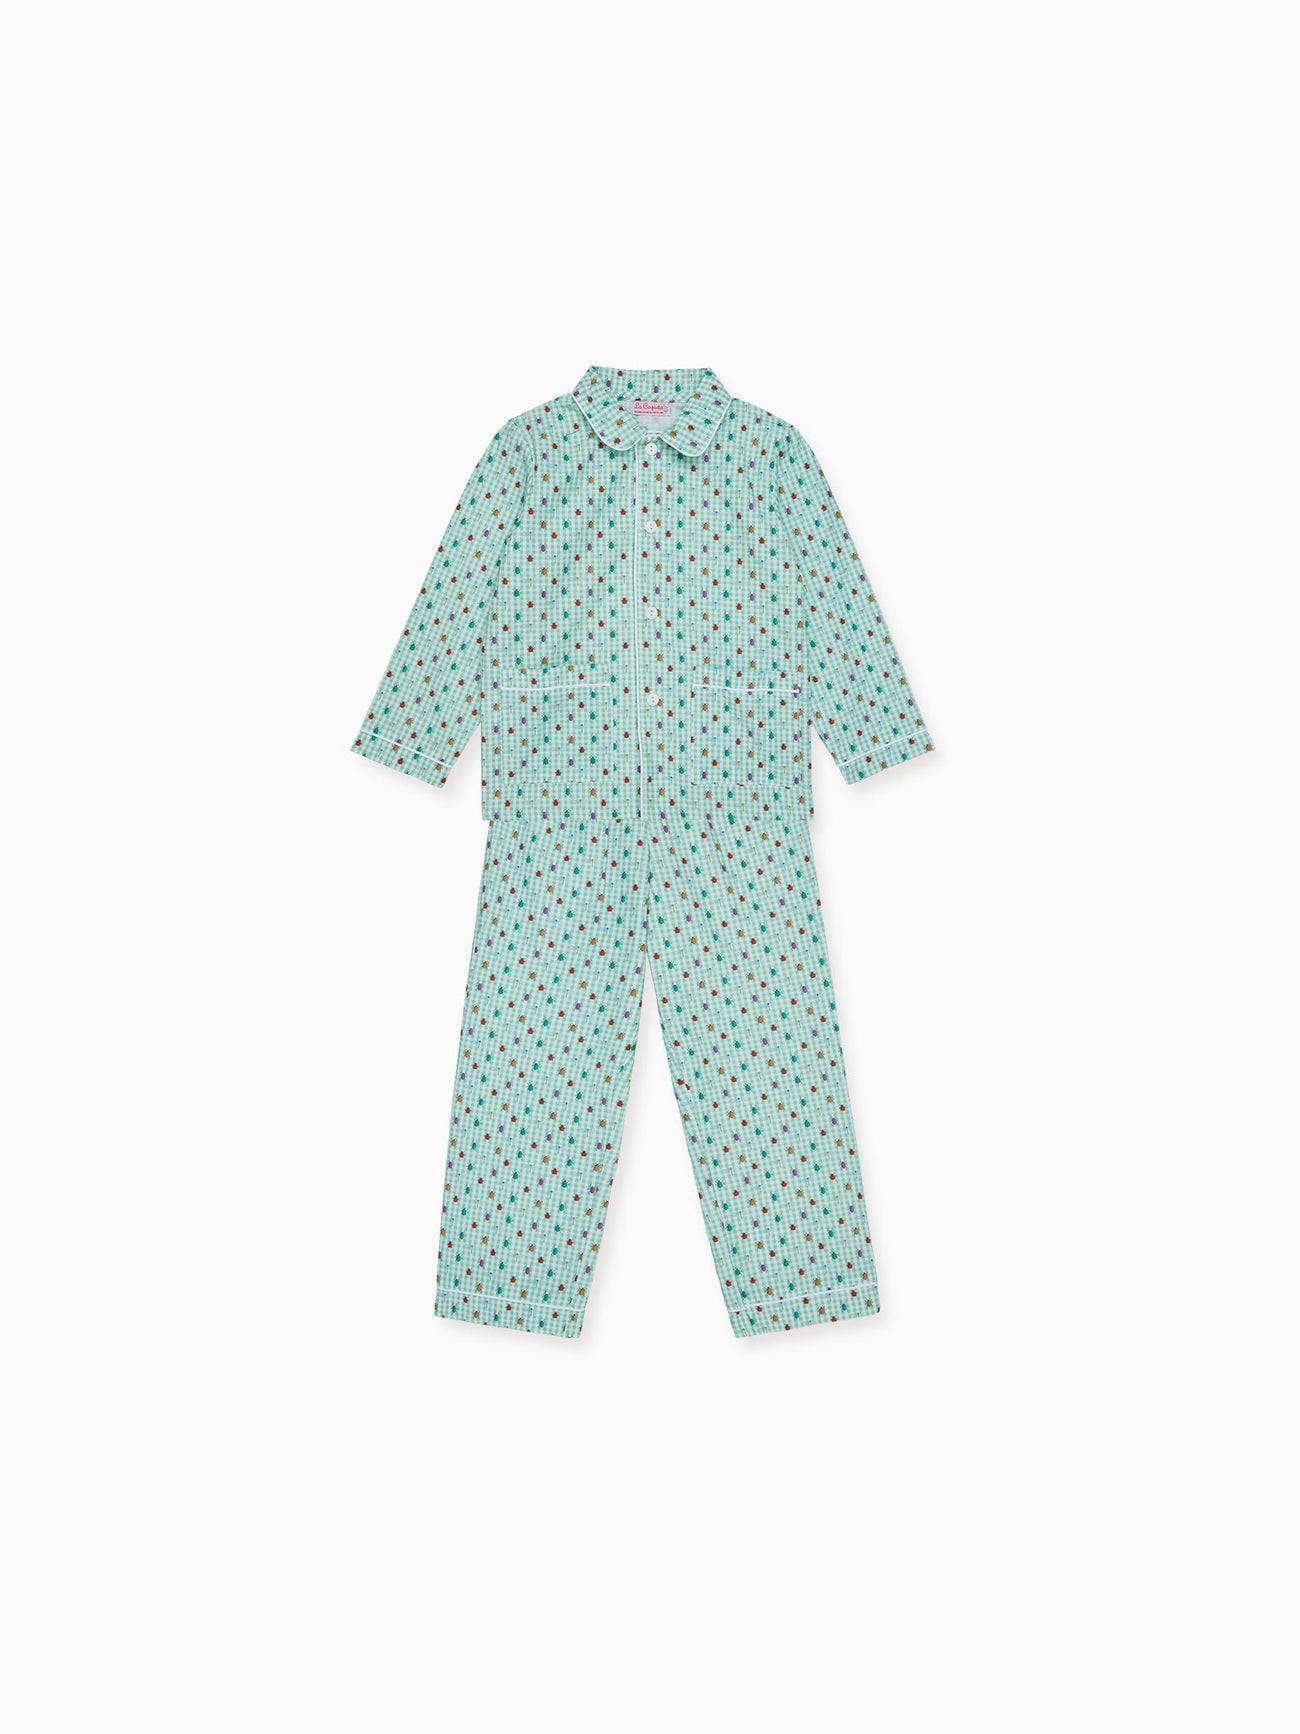 Green Gingham Romera Kids Cotton Pyjamas